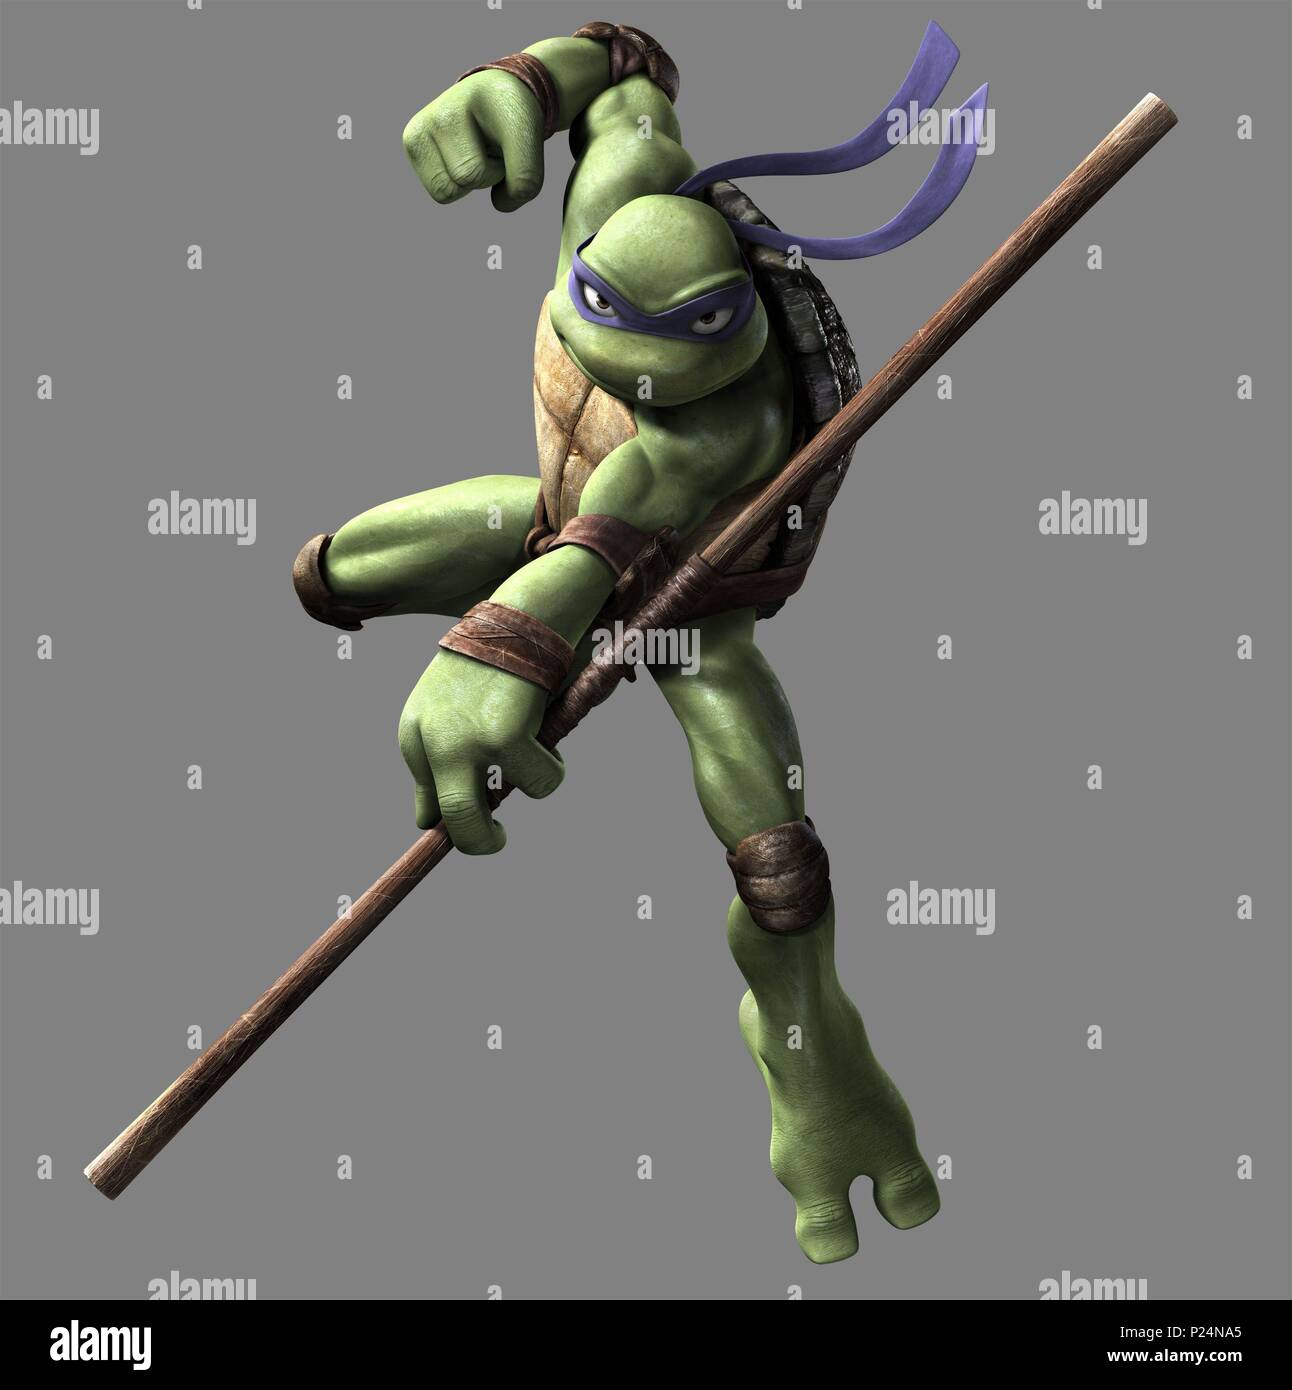 https://c8.alamy.com/comp/P24NA5/original-film-title-ann-english-title-teenage-mutant-ninja-turtles-film-director-kevin-munroe-year-2007-credit-warner-bros-picturesweinstein-company-theimagi-animation-album-P24NA5.jpg